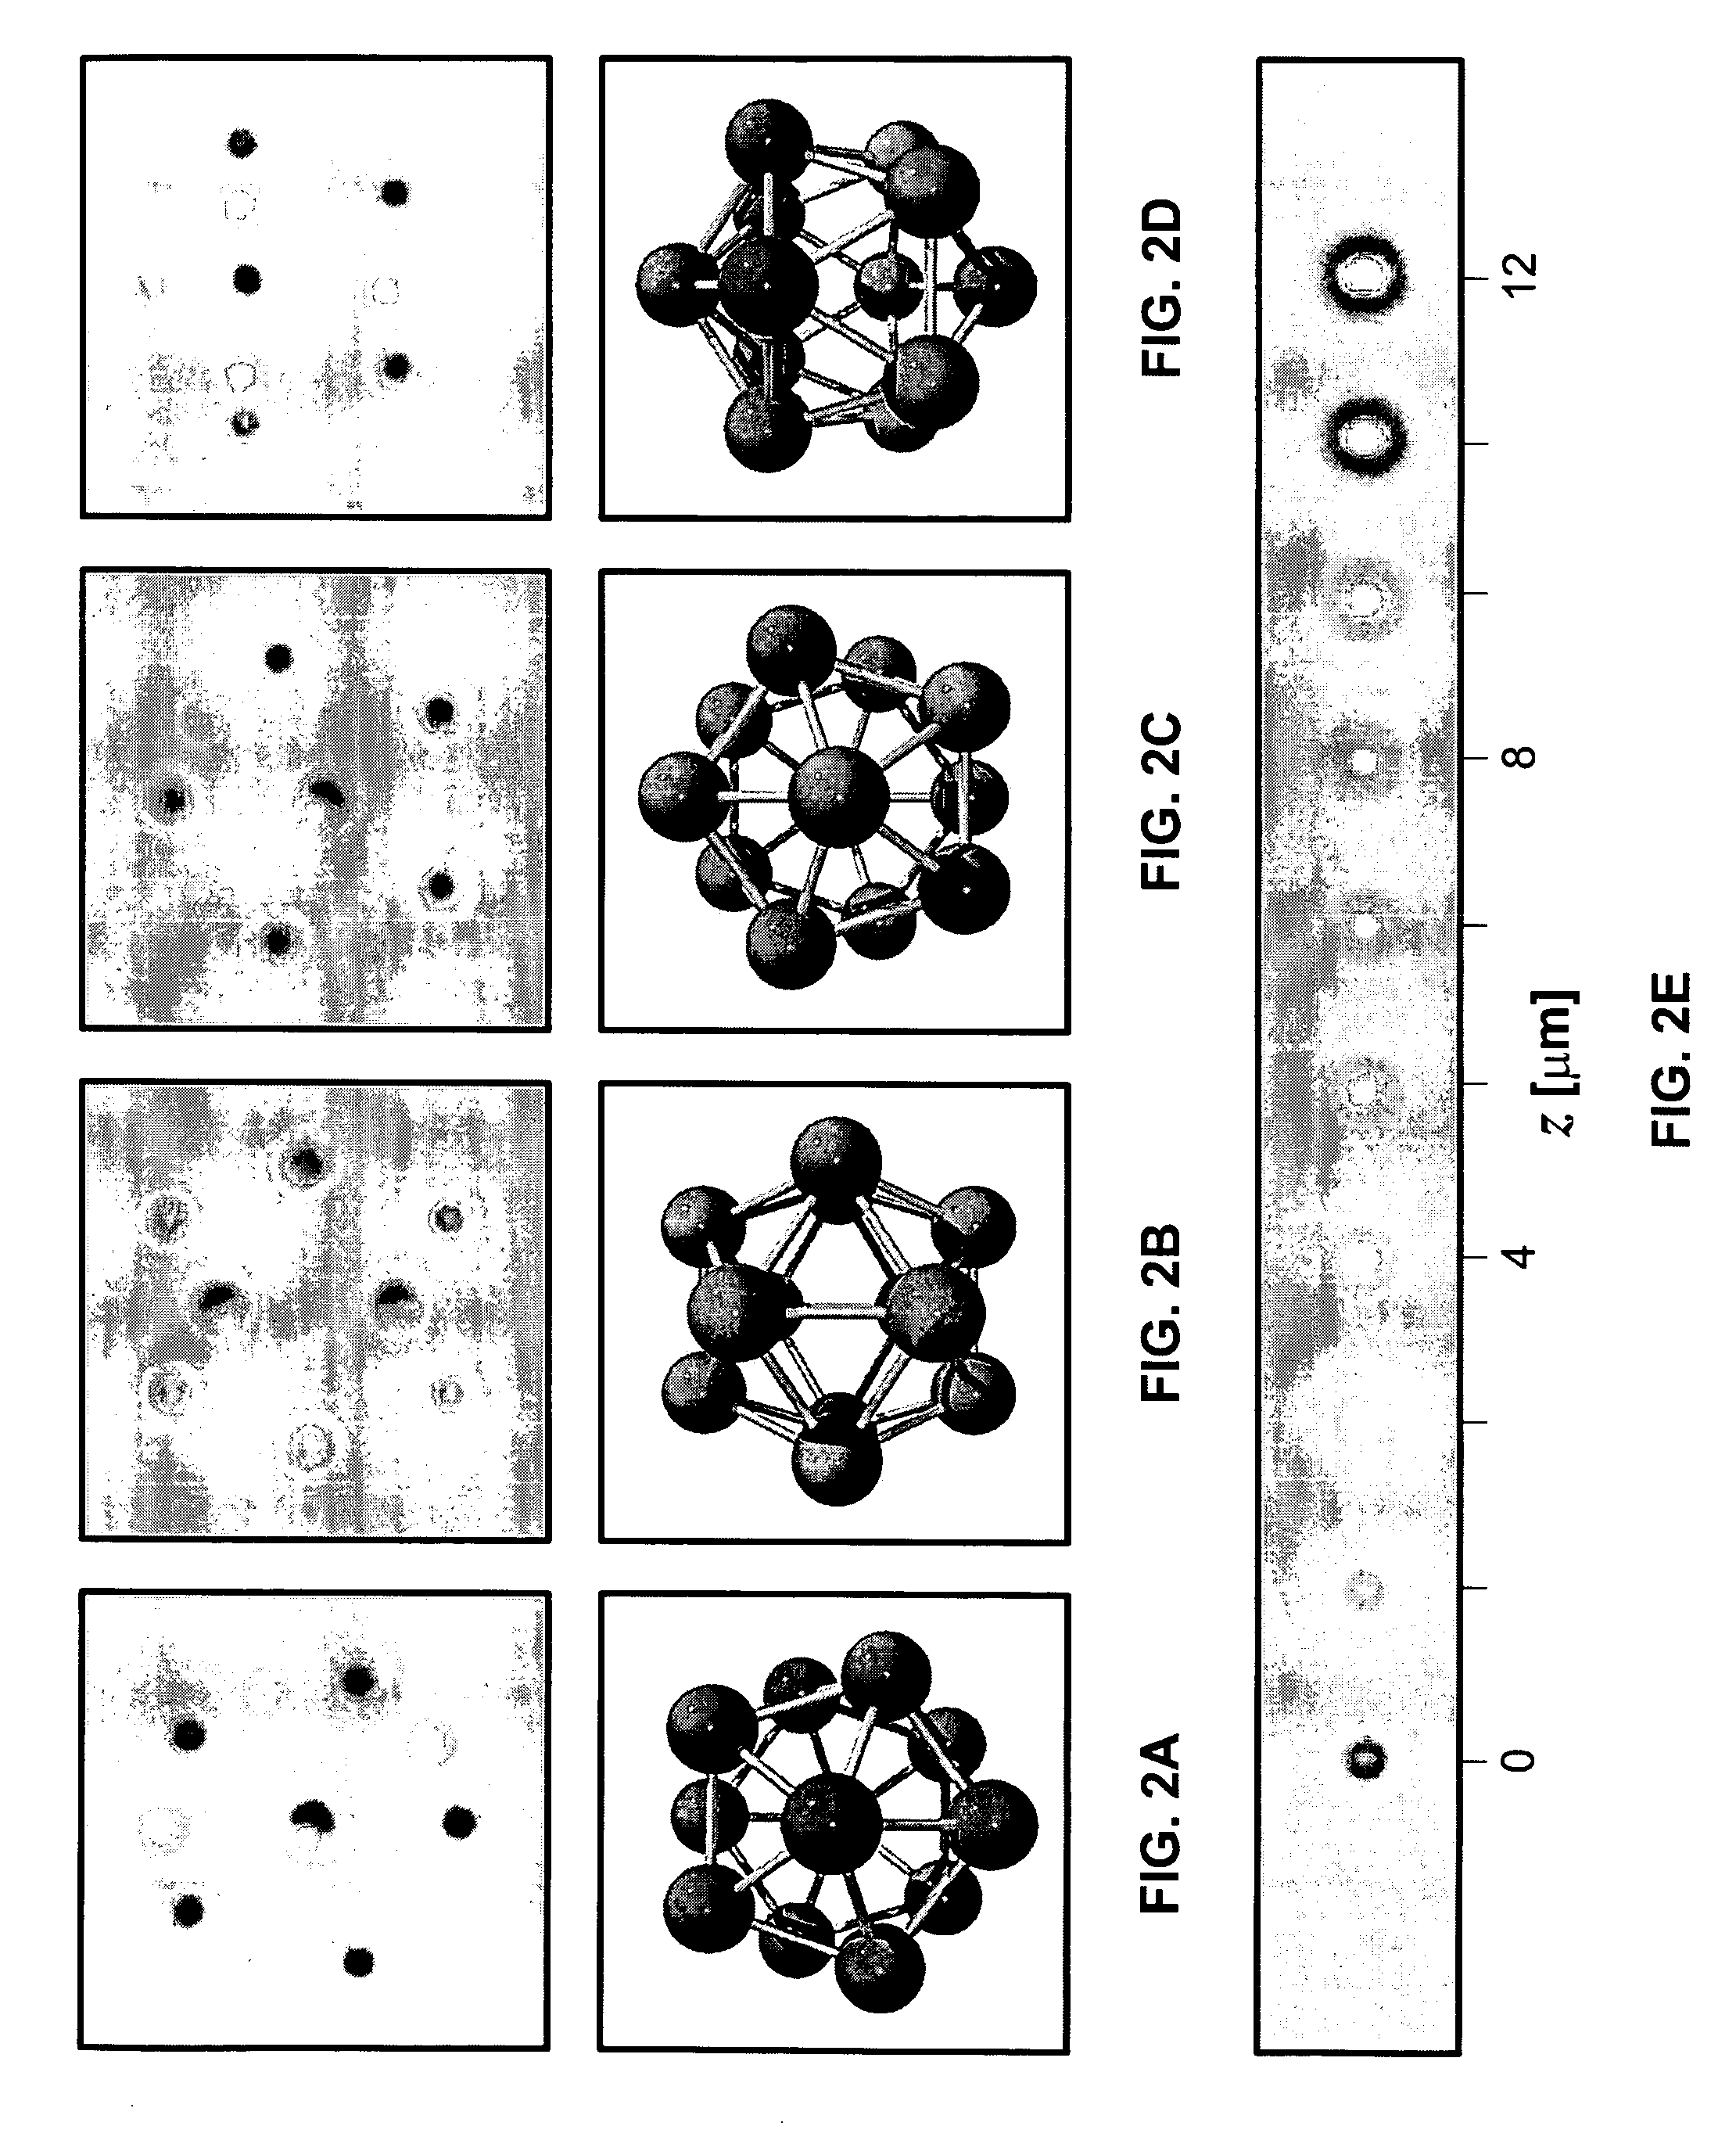 Assembly of quasicrystalline photonic heterostructures